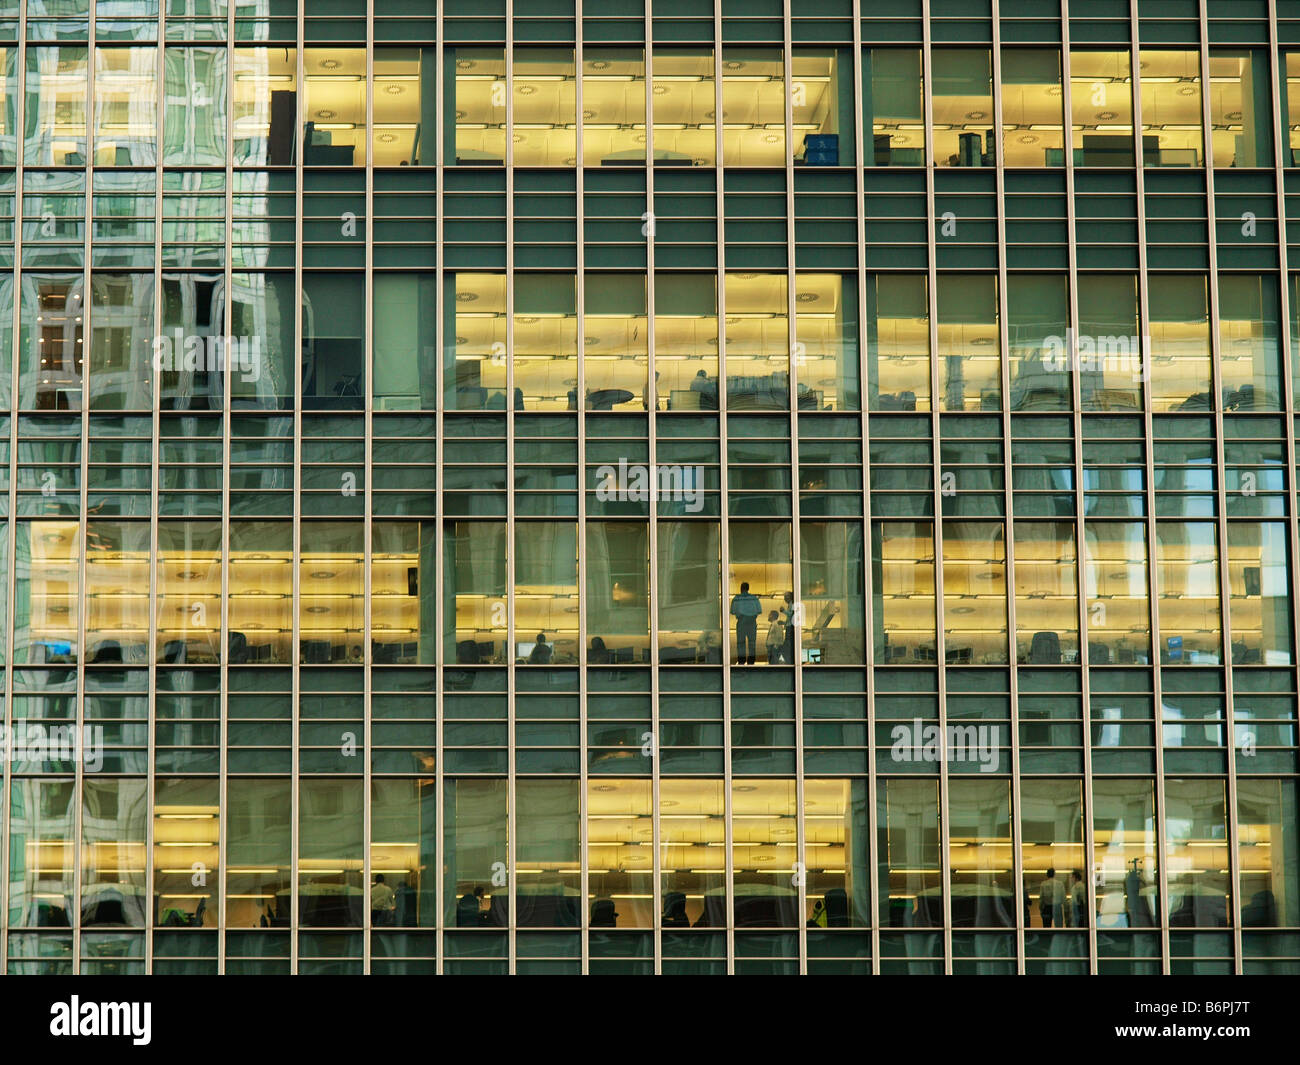 Lehman brothers office windows pattern at dusk Docklands London UK Stock Photo